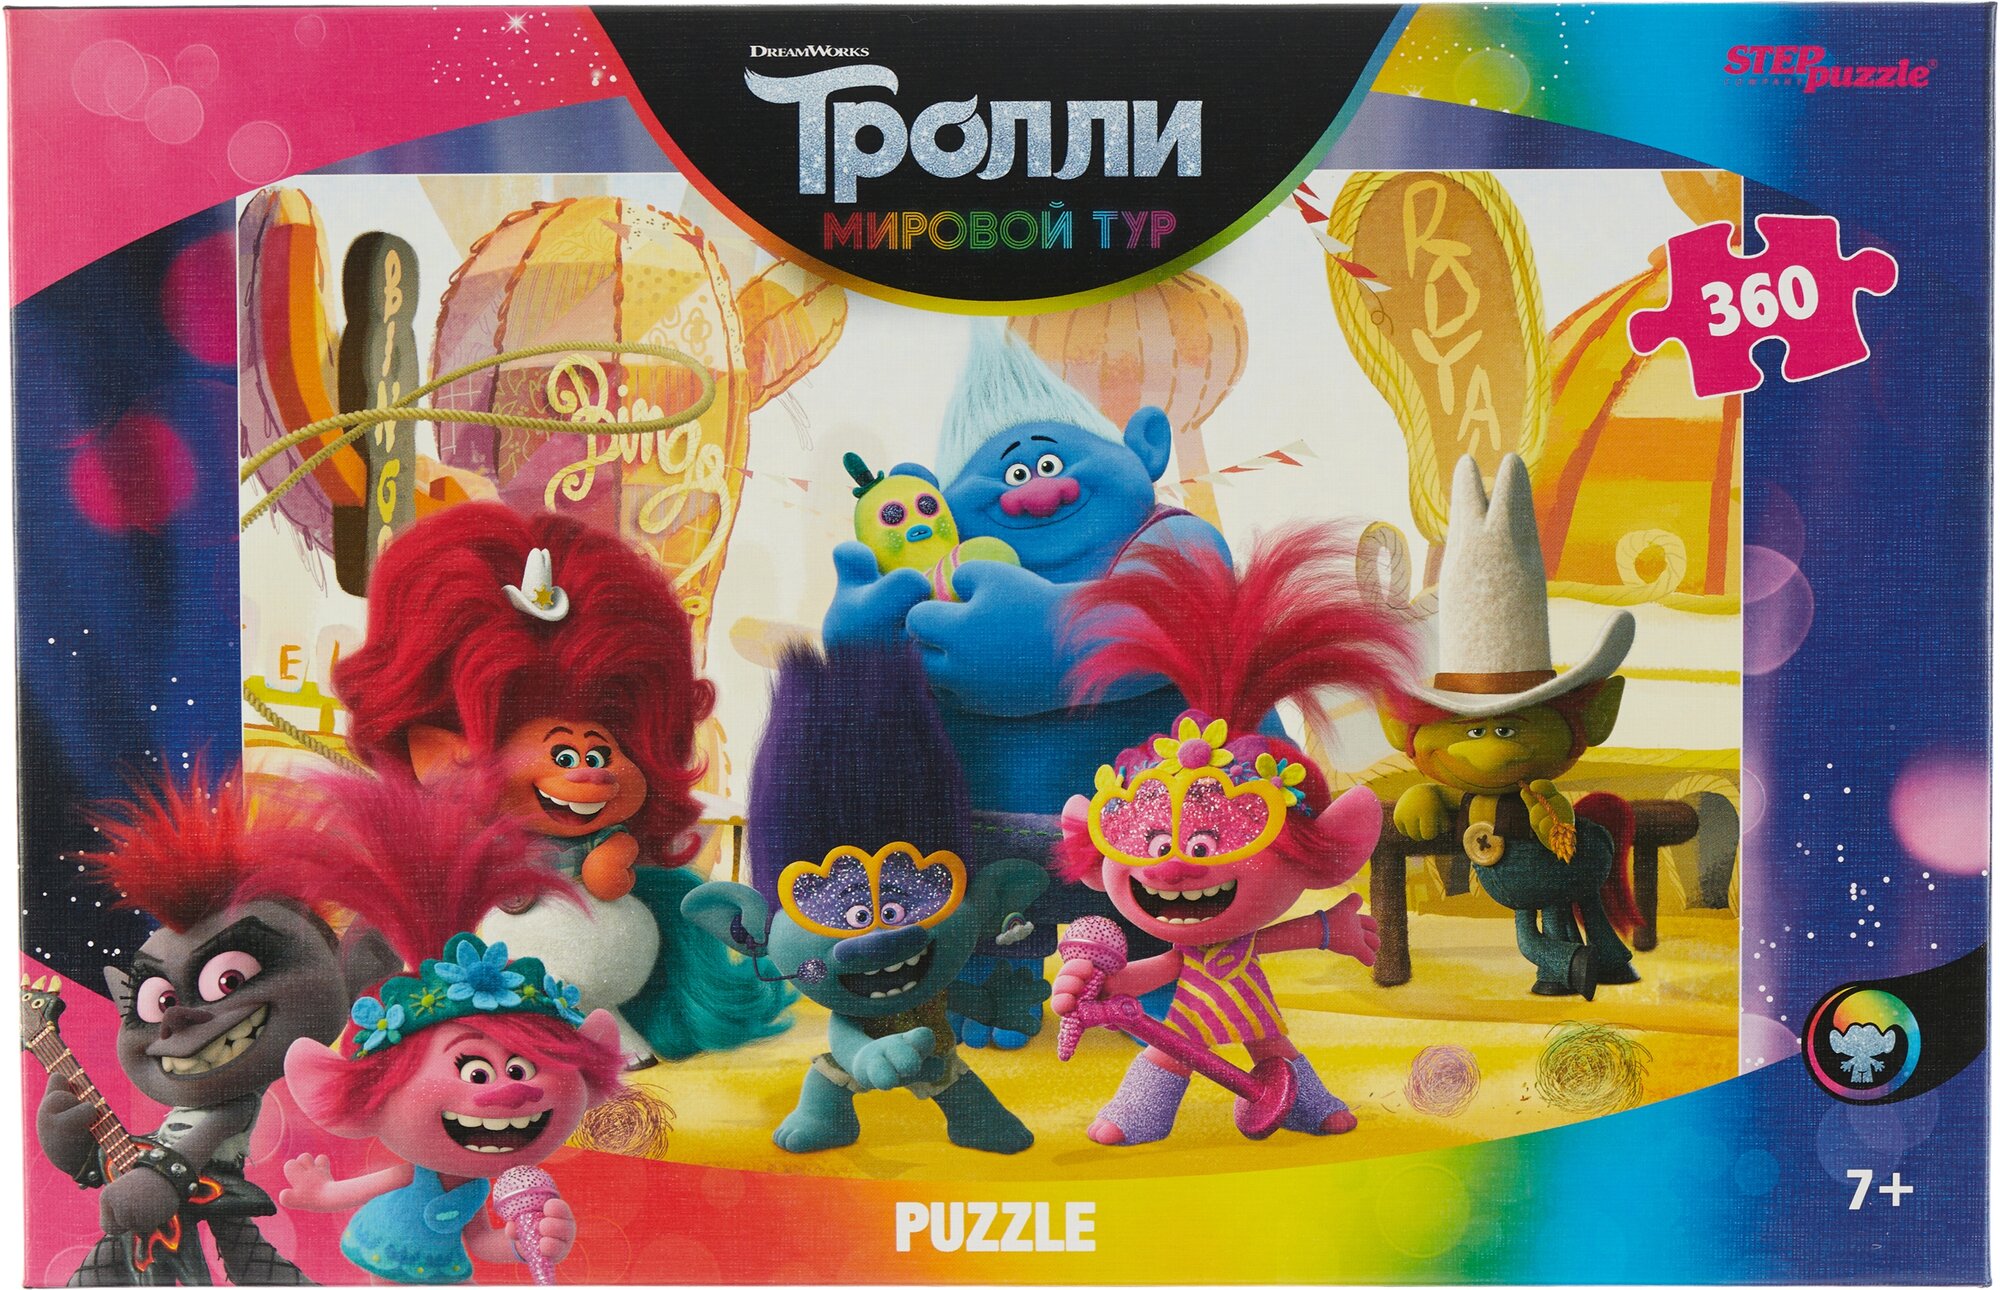 Пазл Step puzzle Trolls-2 (96087), 360 дет., разноцветный